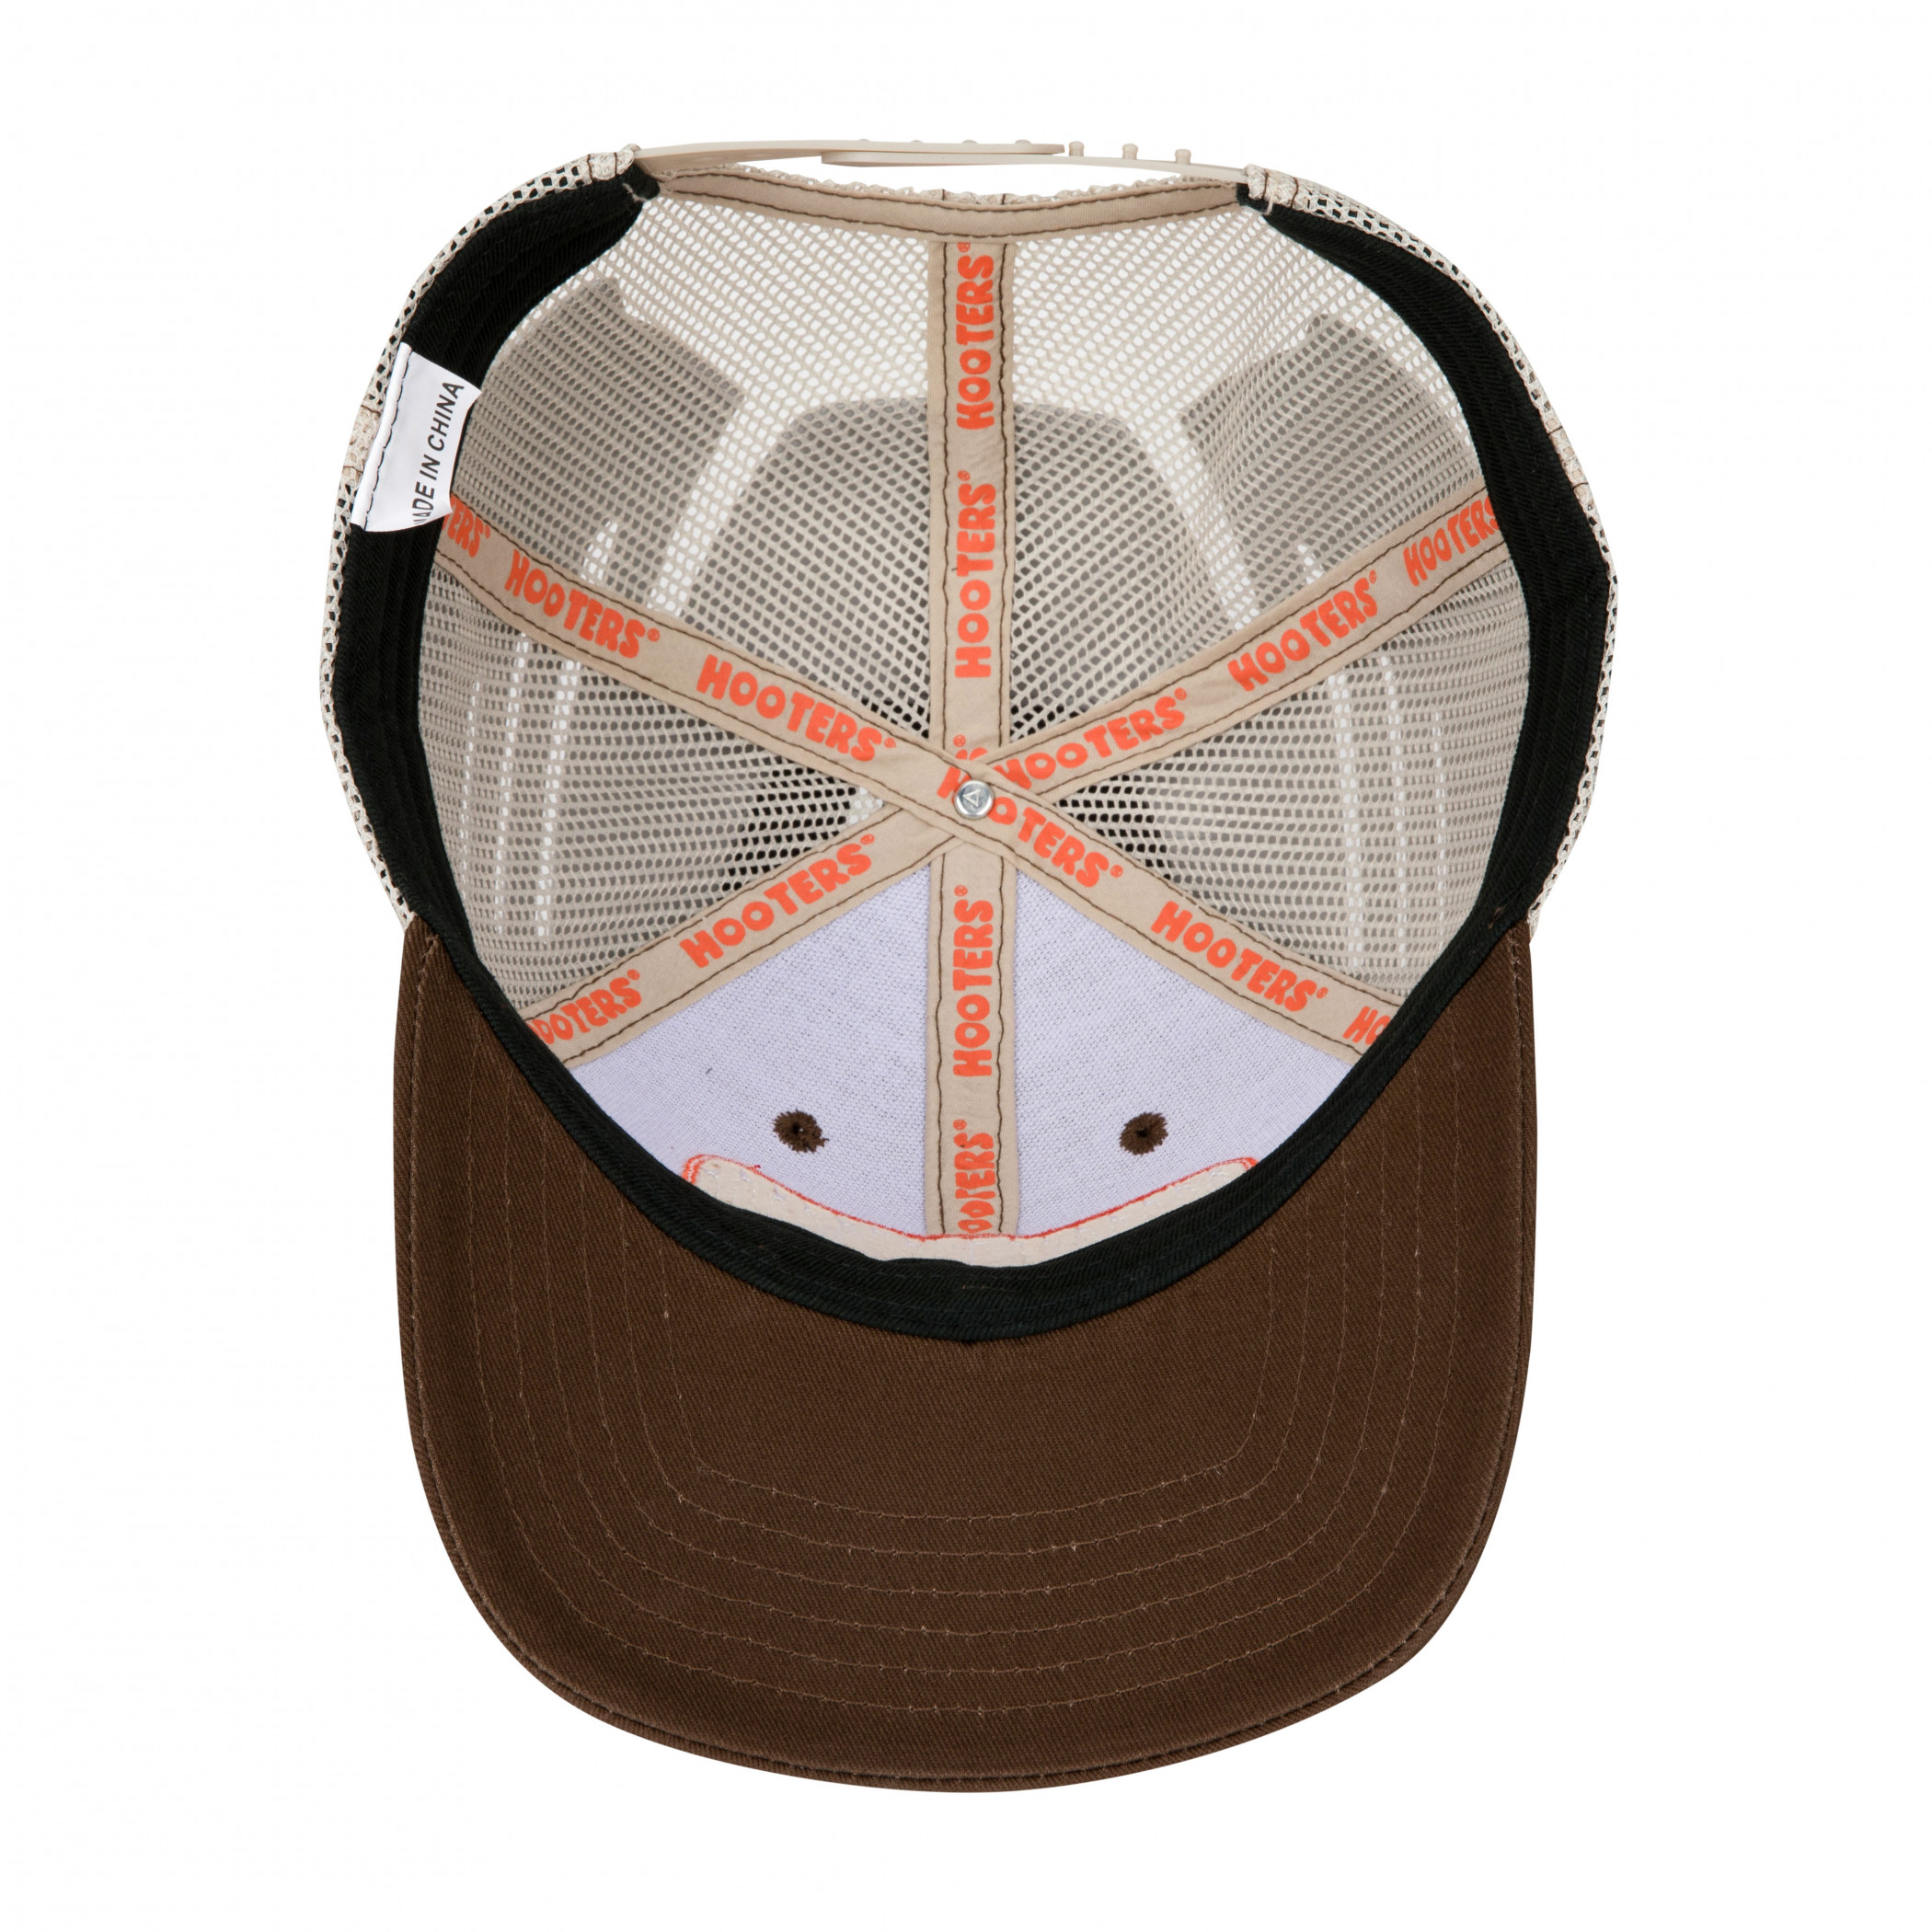 Hooters Logo Retro Stripe Mesh Trucker Hat